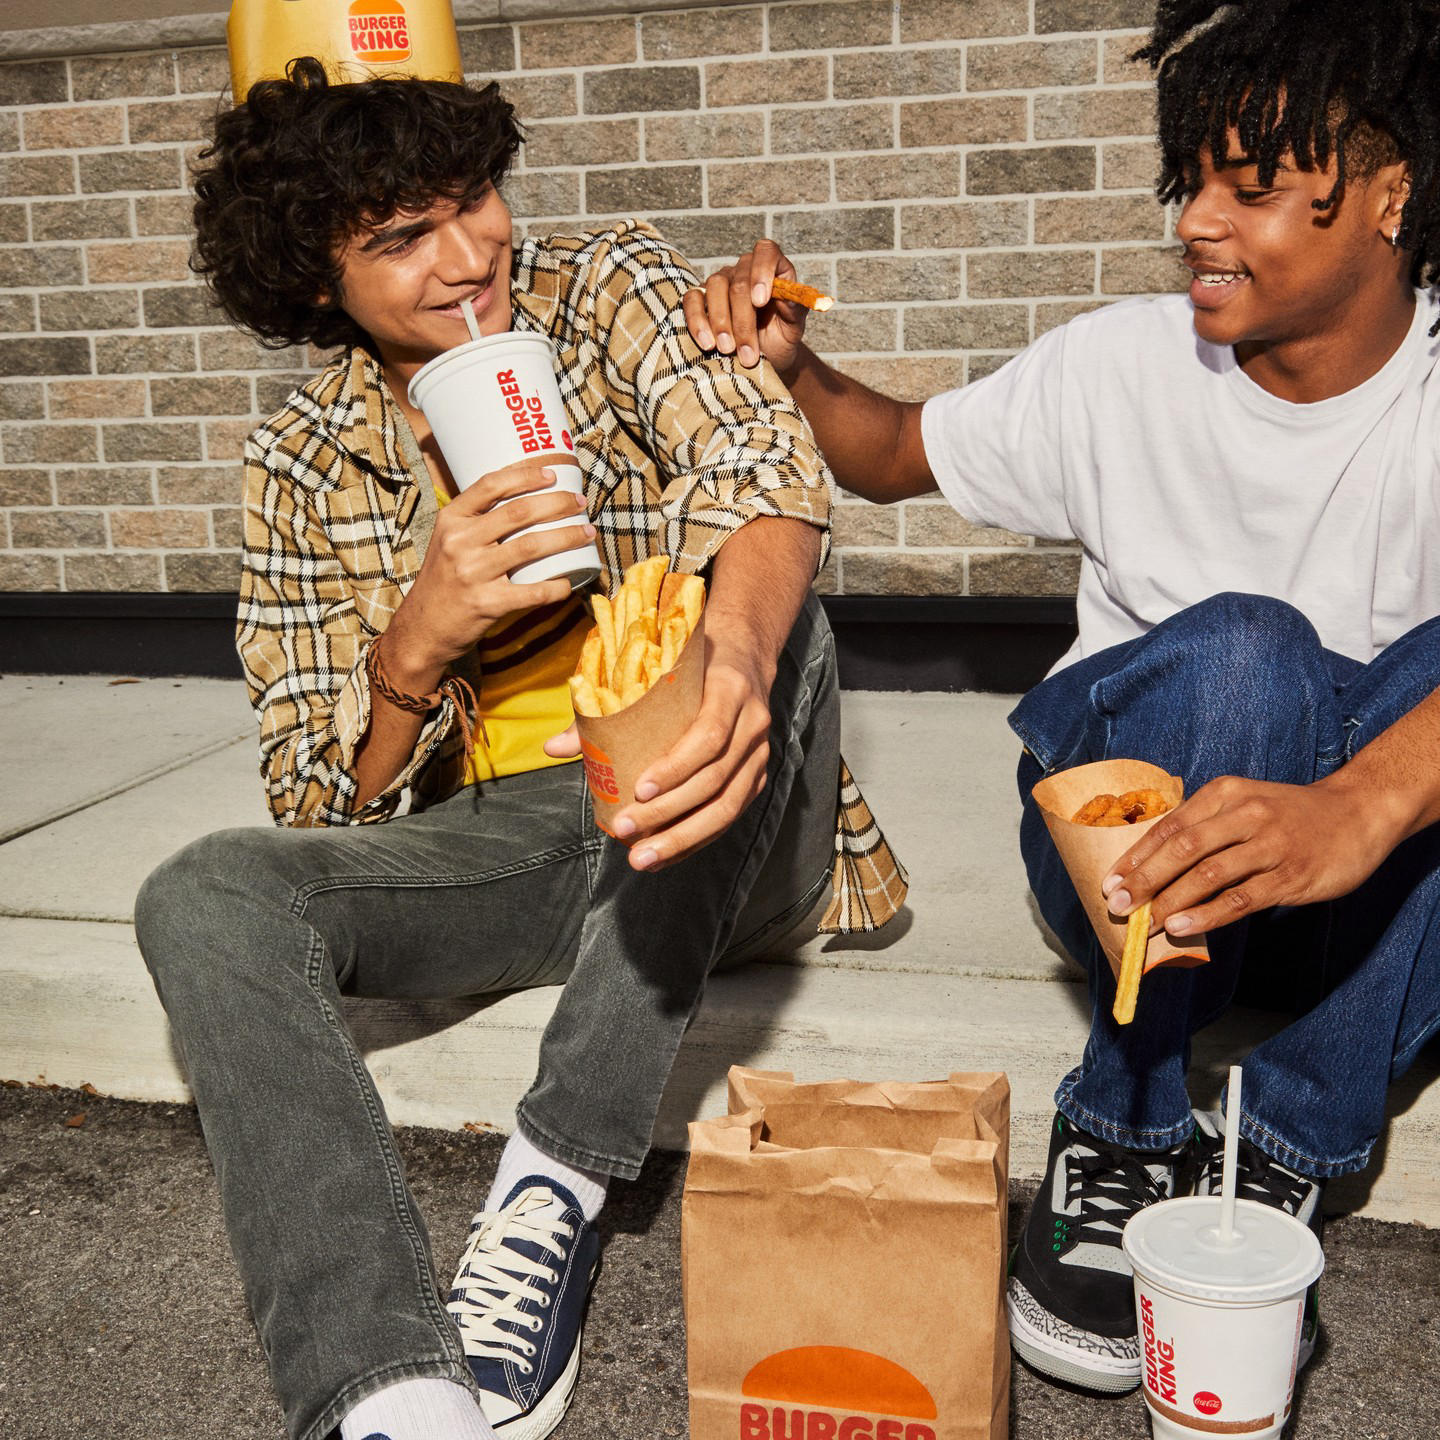 Burger King - even a king’s gotta share